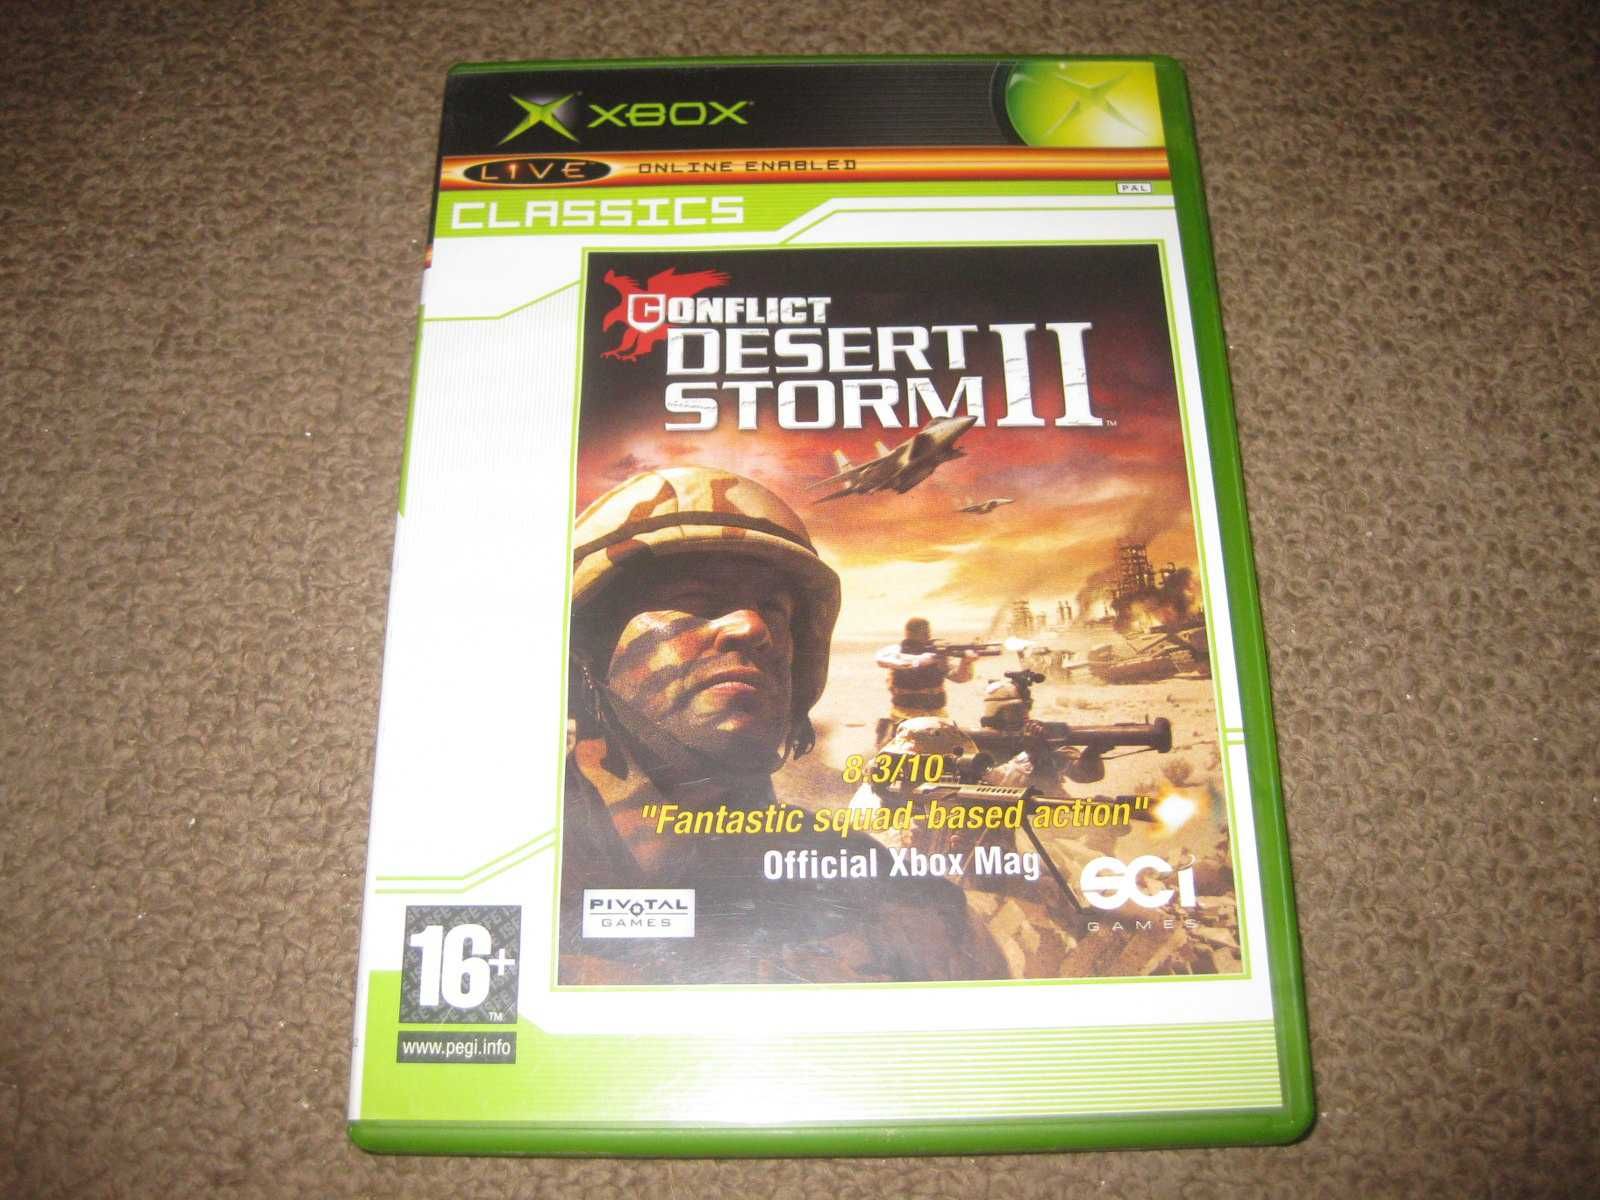 Jogo "Conflict Desert Storm II" para XBOX